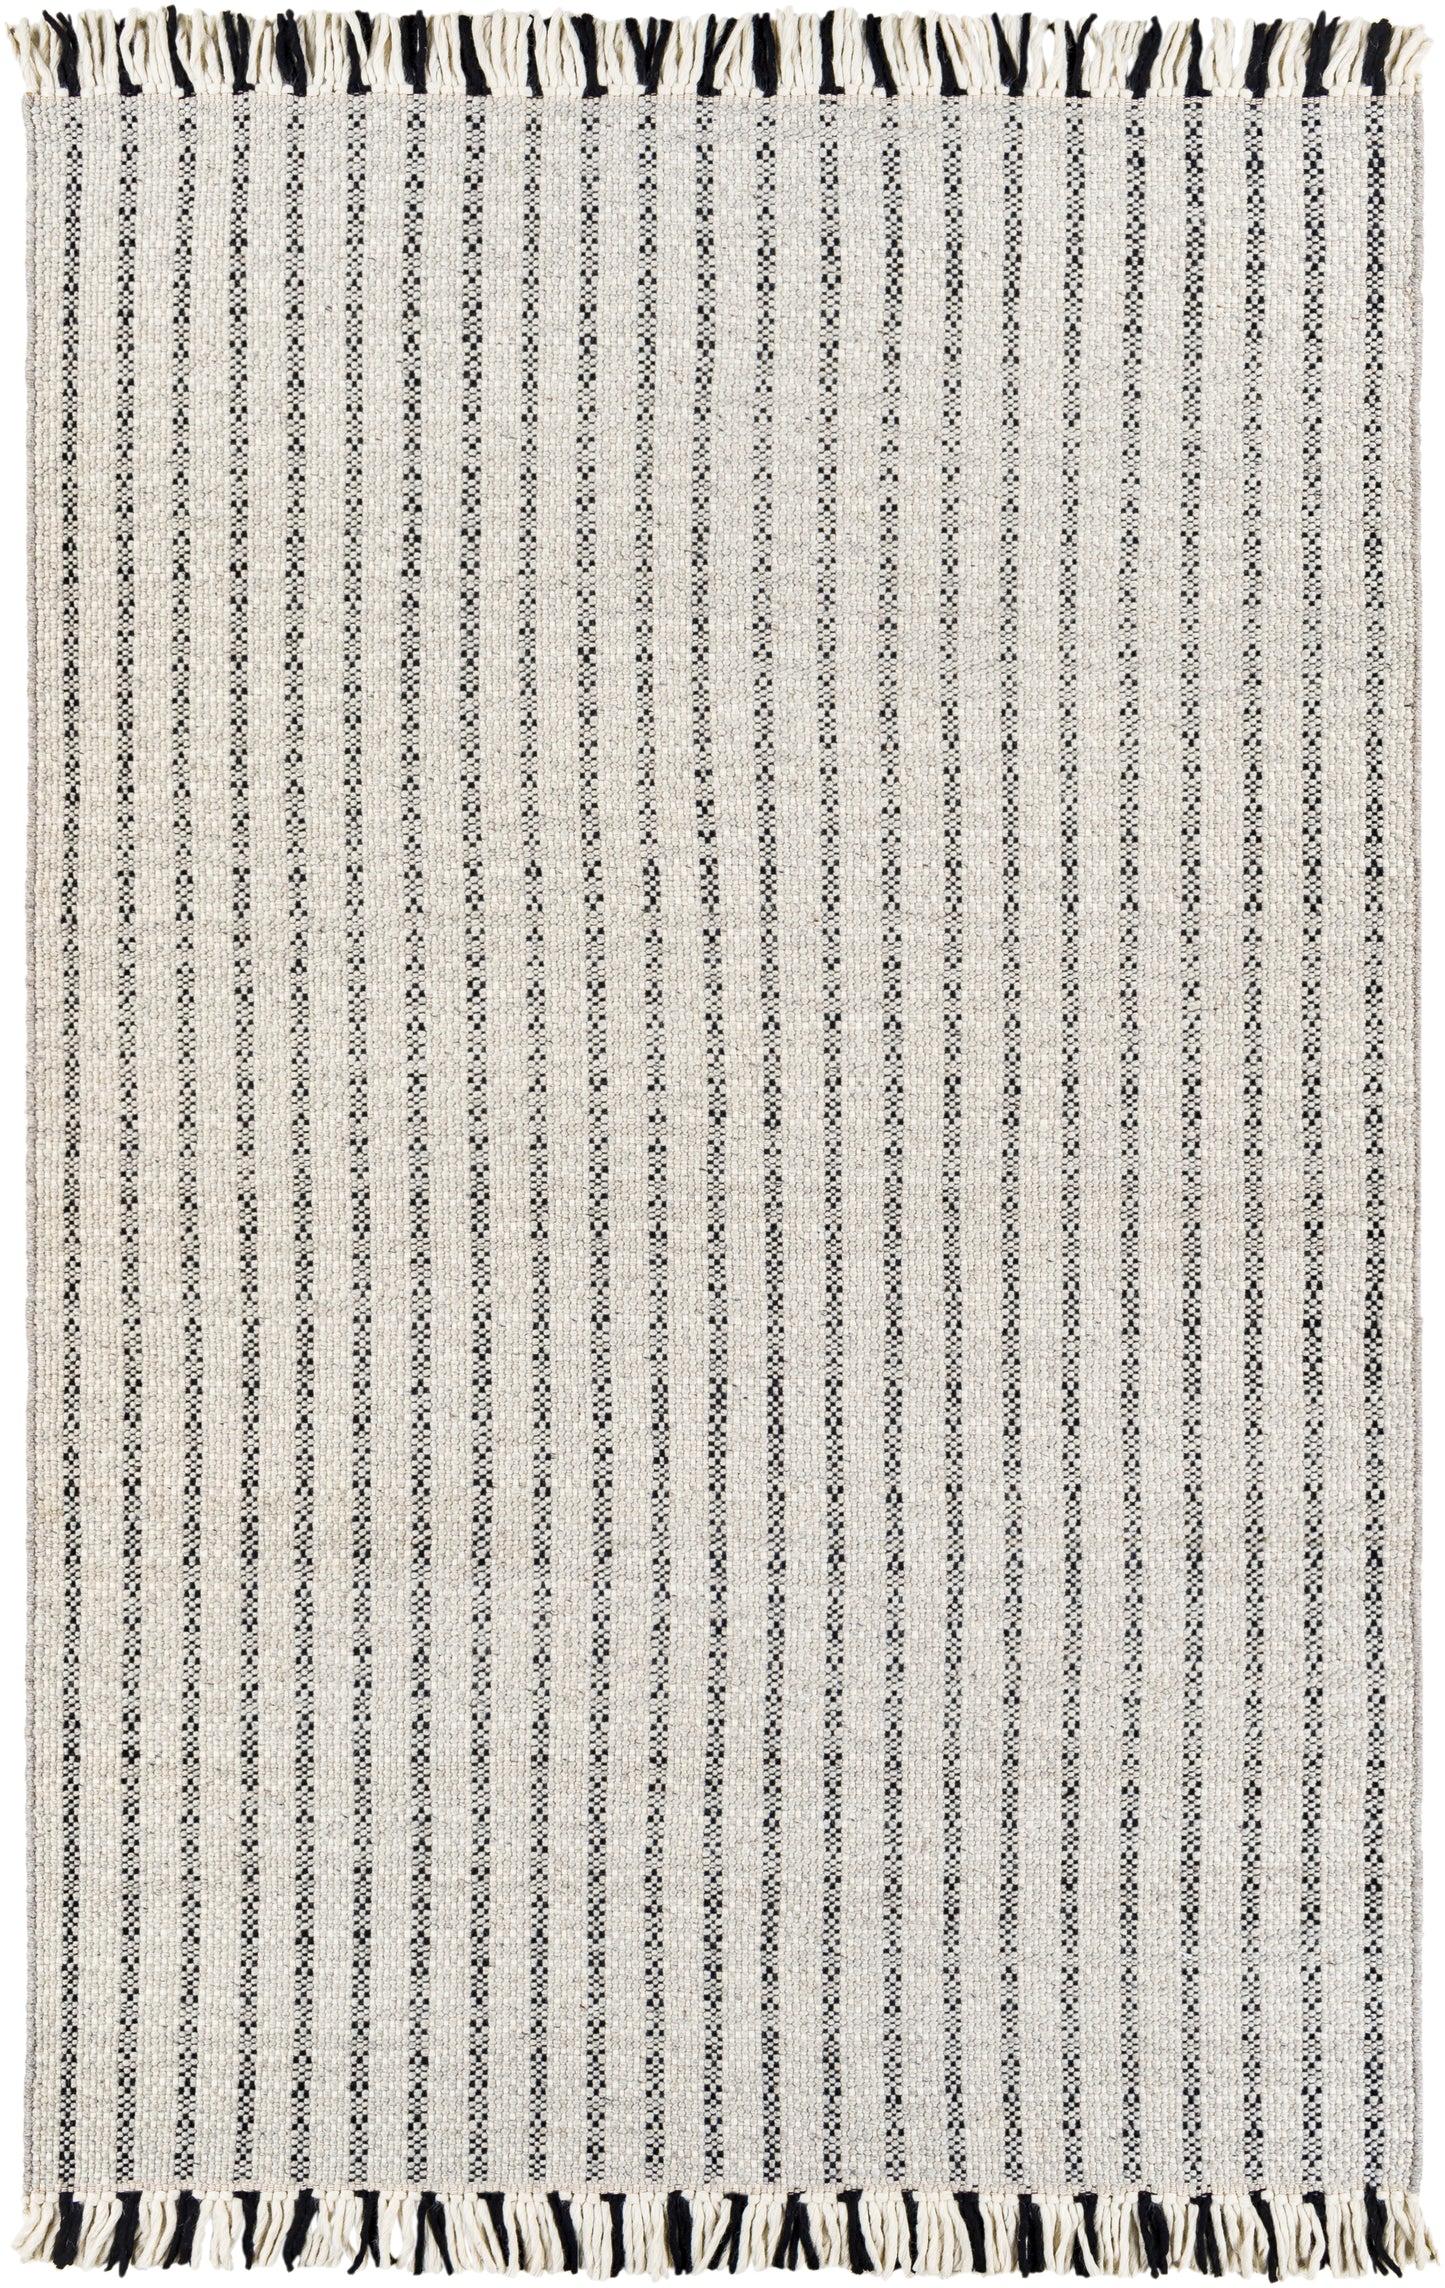 Reliance 27893 Hand Woven Wool Indoor Area Rug by Surya Rugs